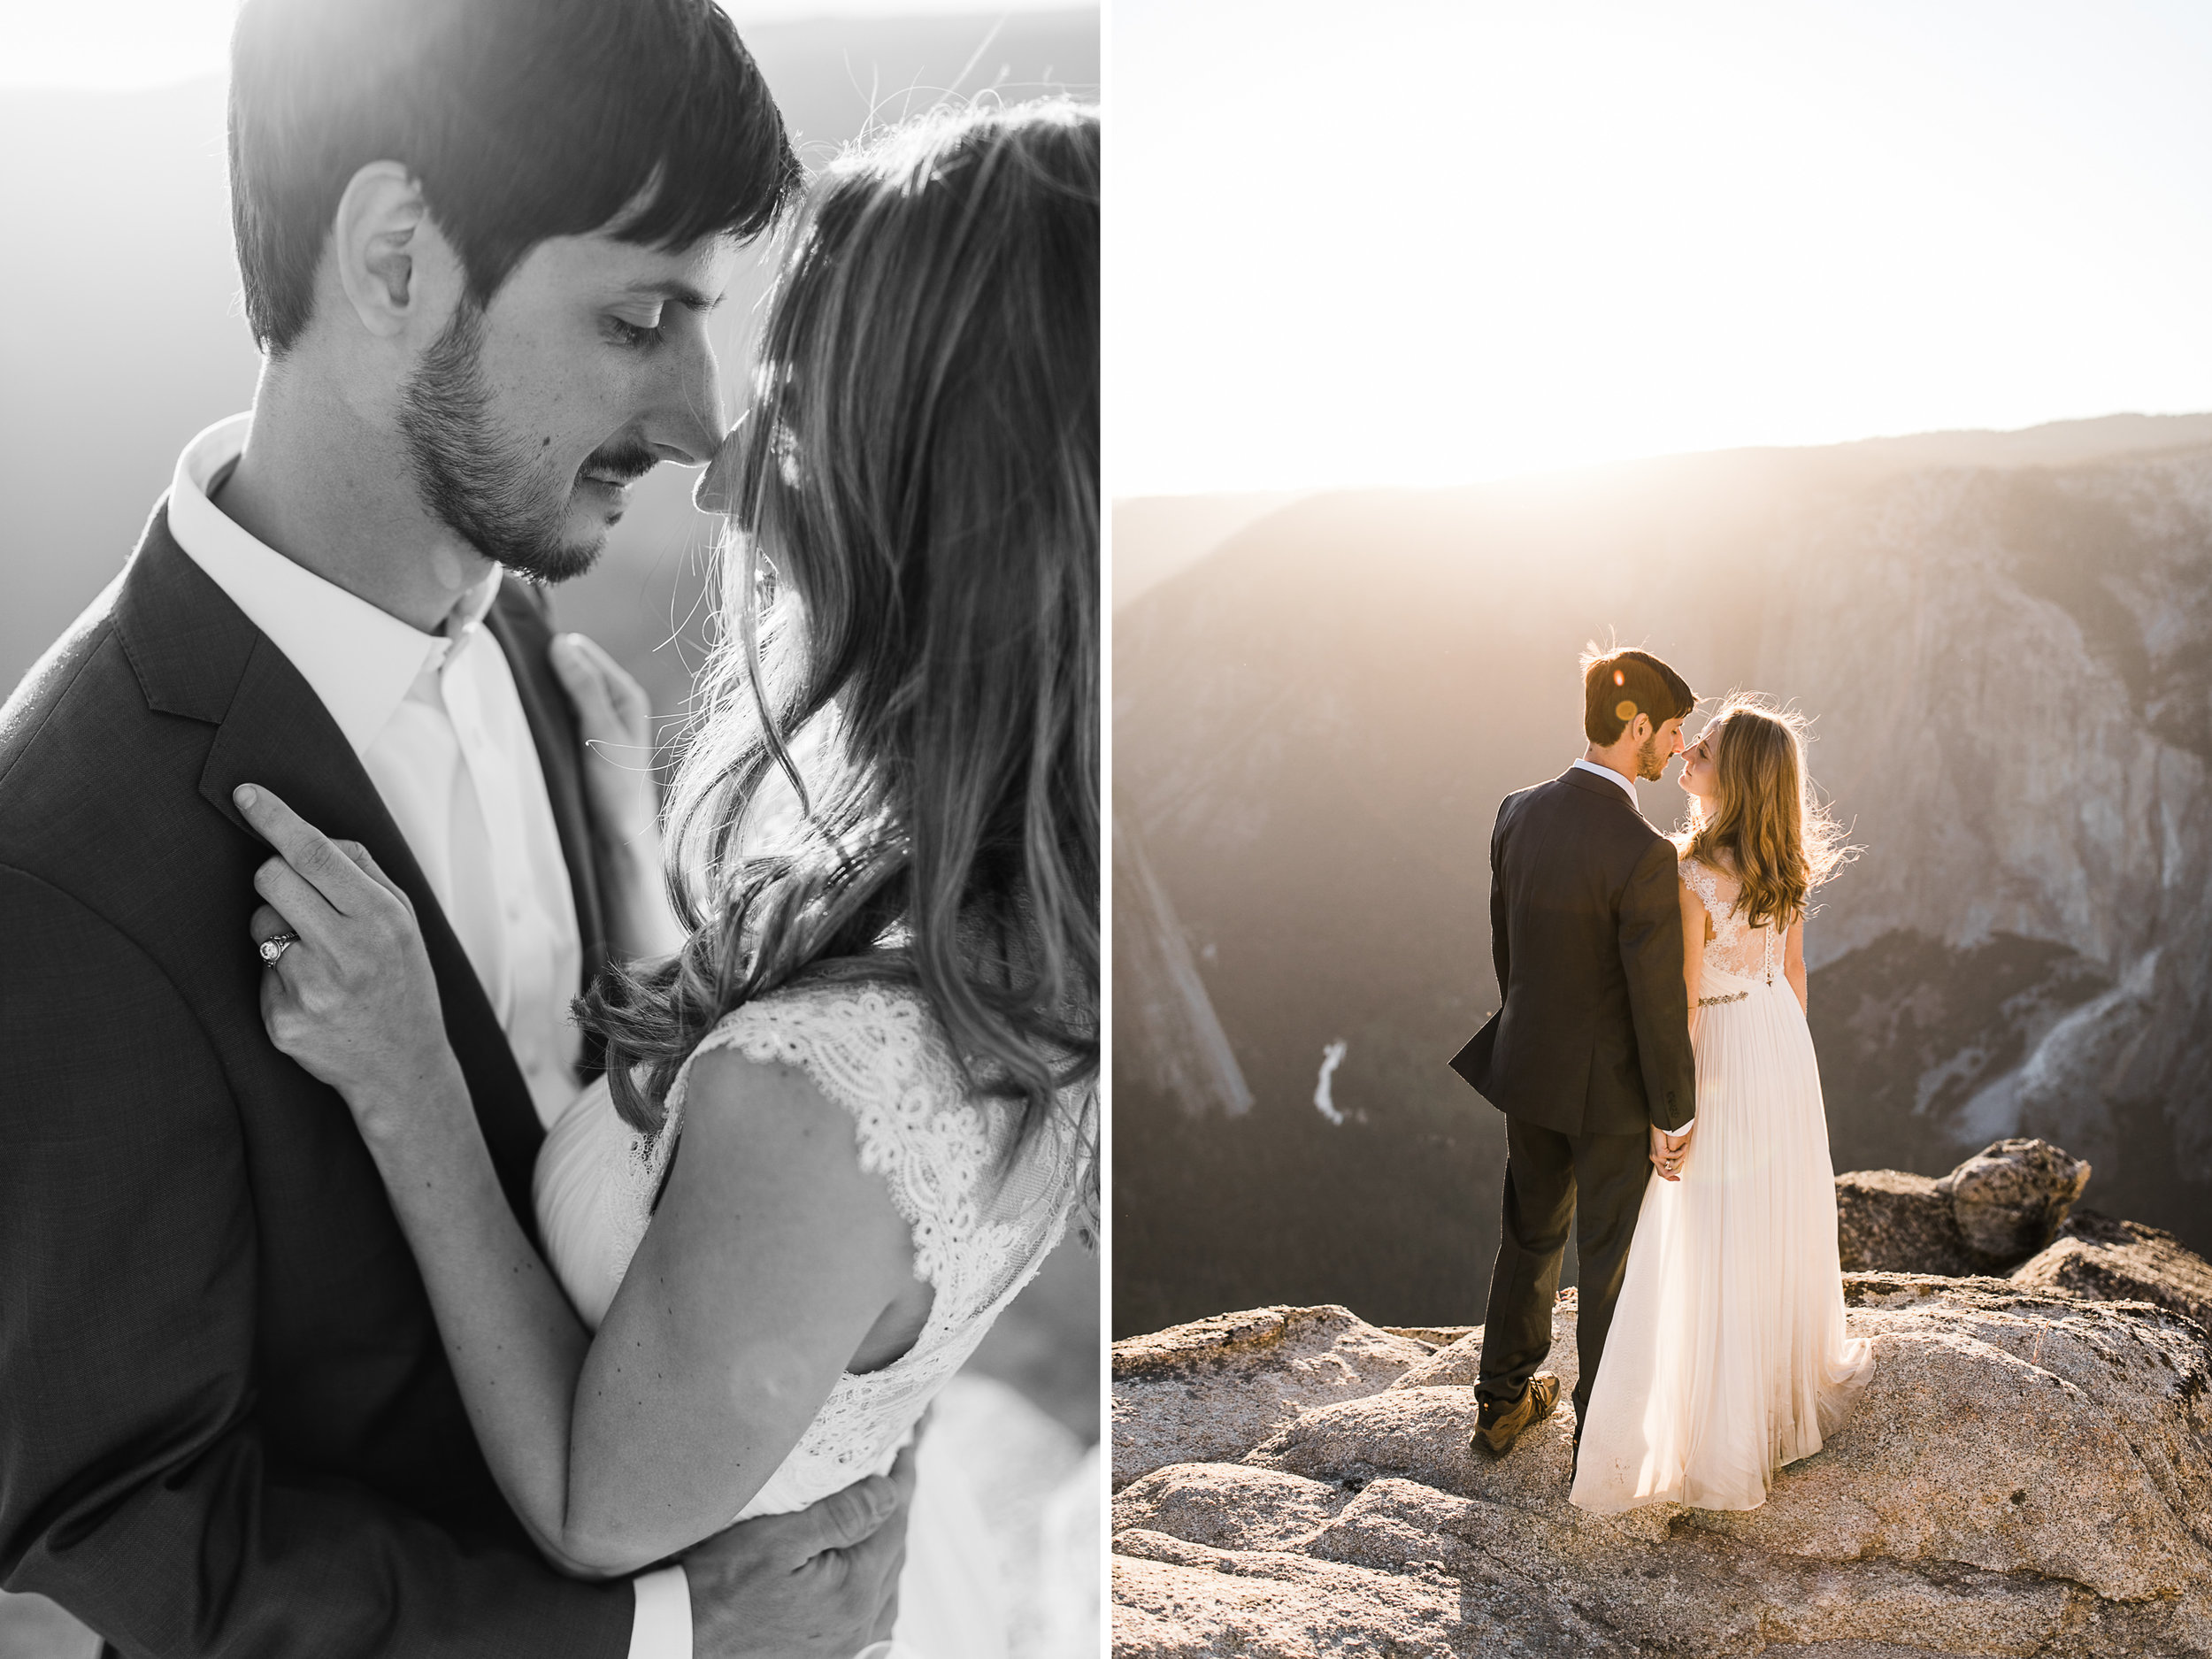 Chas + Michelle's adventurous wedding portraits | post-elopement photos in yosemite national park | adventure wedding photographer